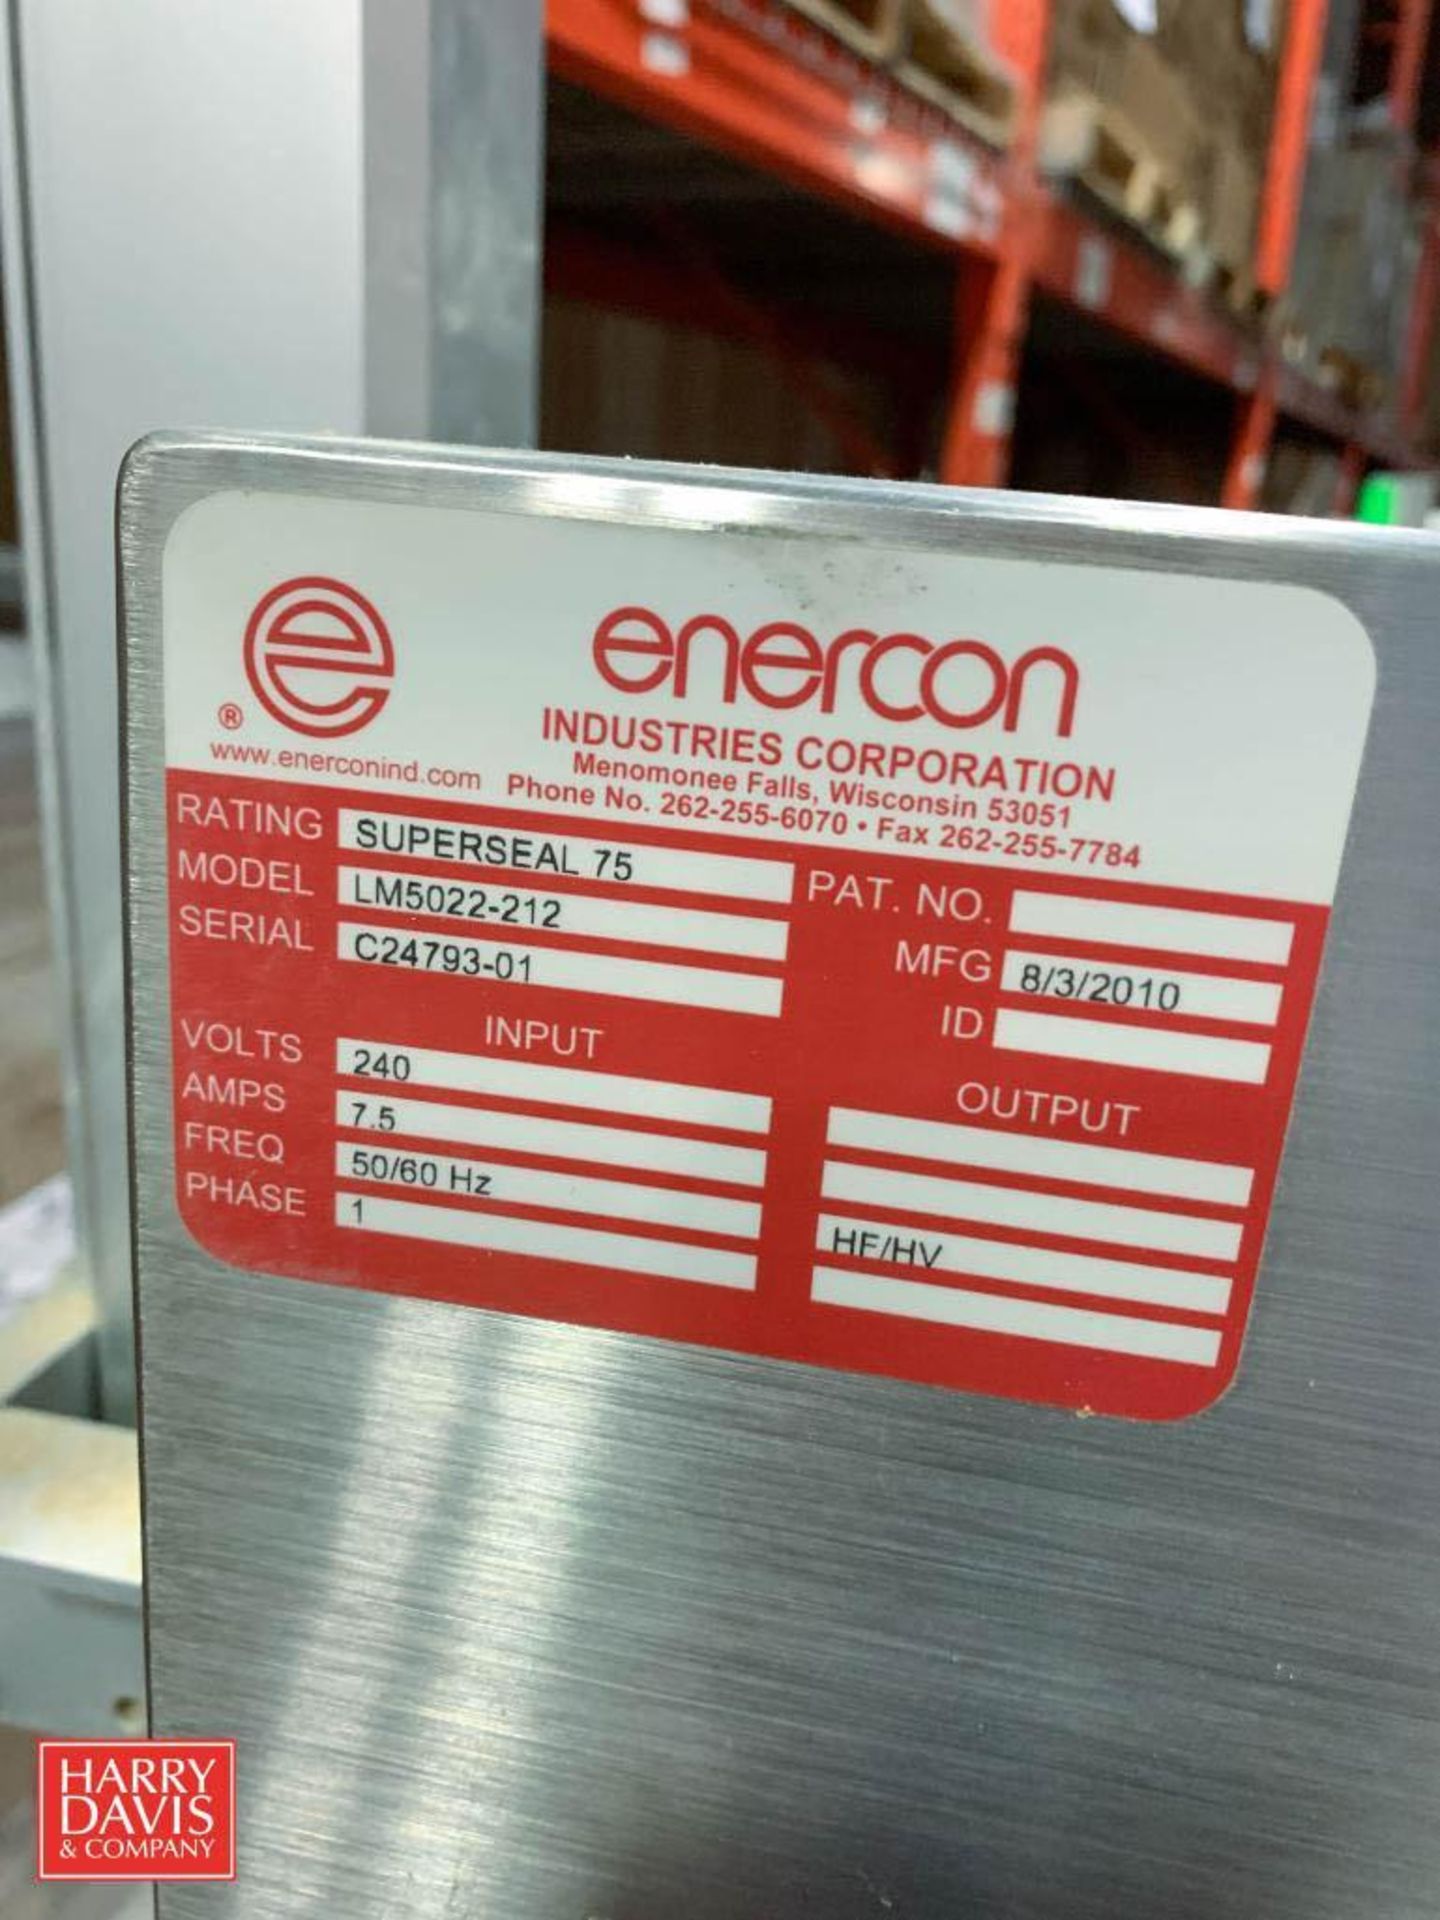 Enercon Heat Sealer Superseal 75, Model: LM5022-212, S/N: C24793-01 (Location: Edison, NJ) - Image 2 of 2